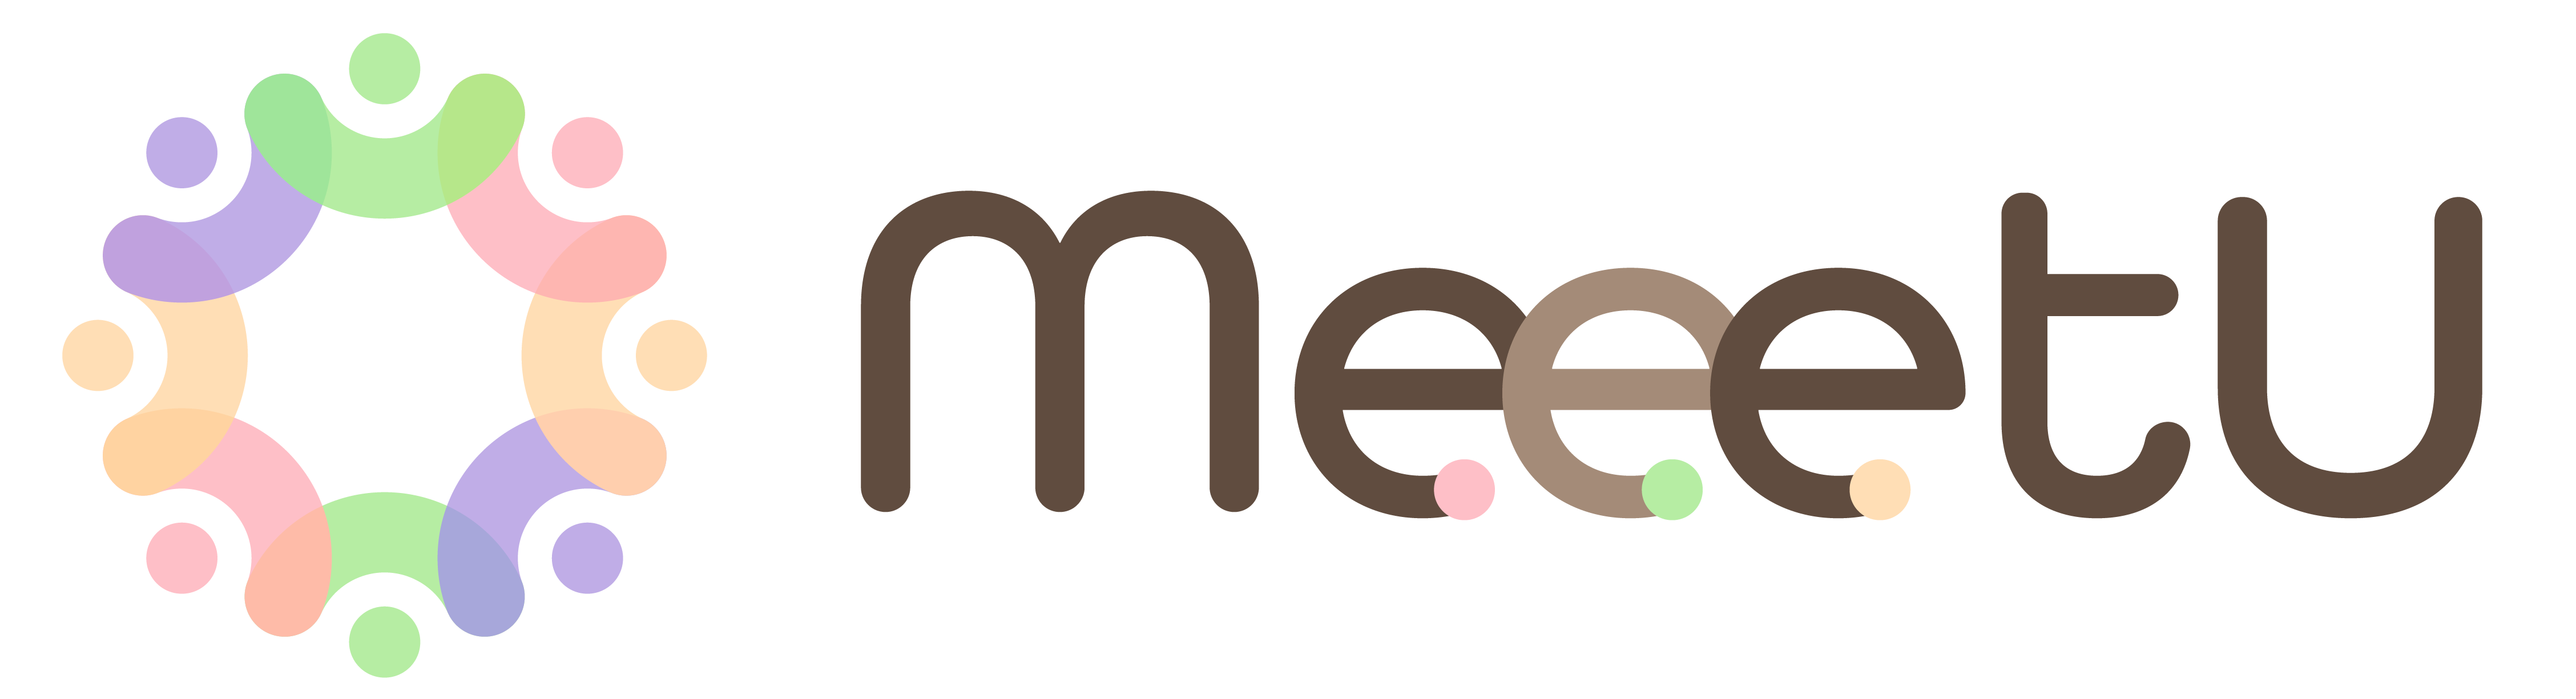 MeeetU(国際心理支援協会)